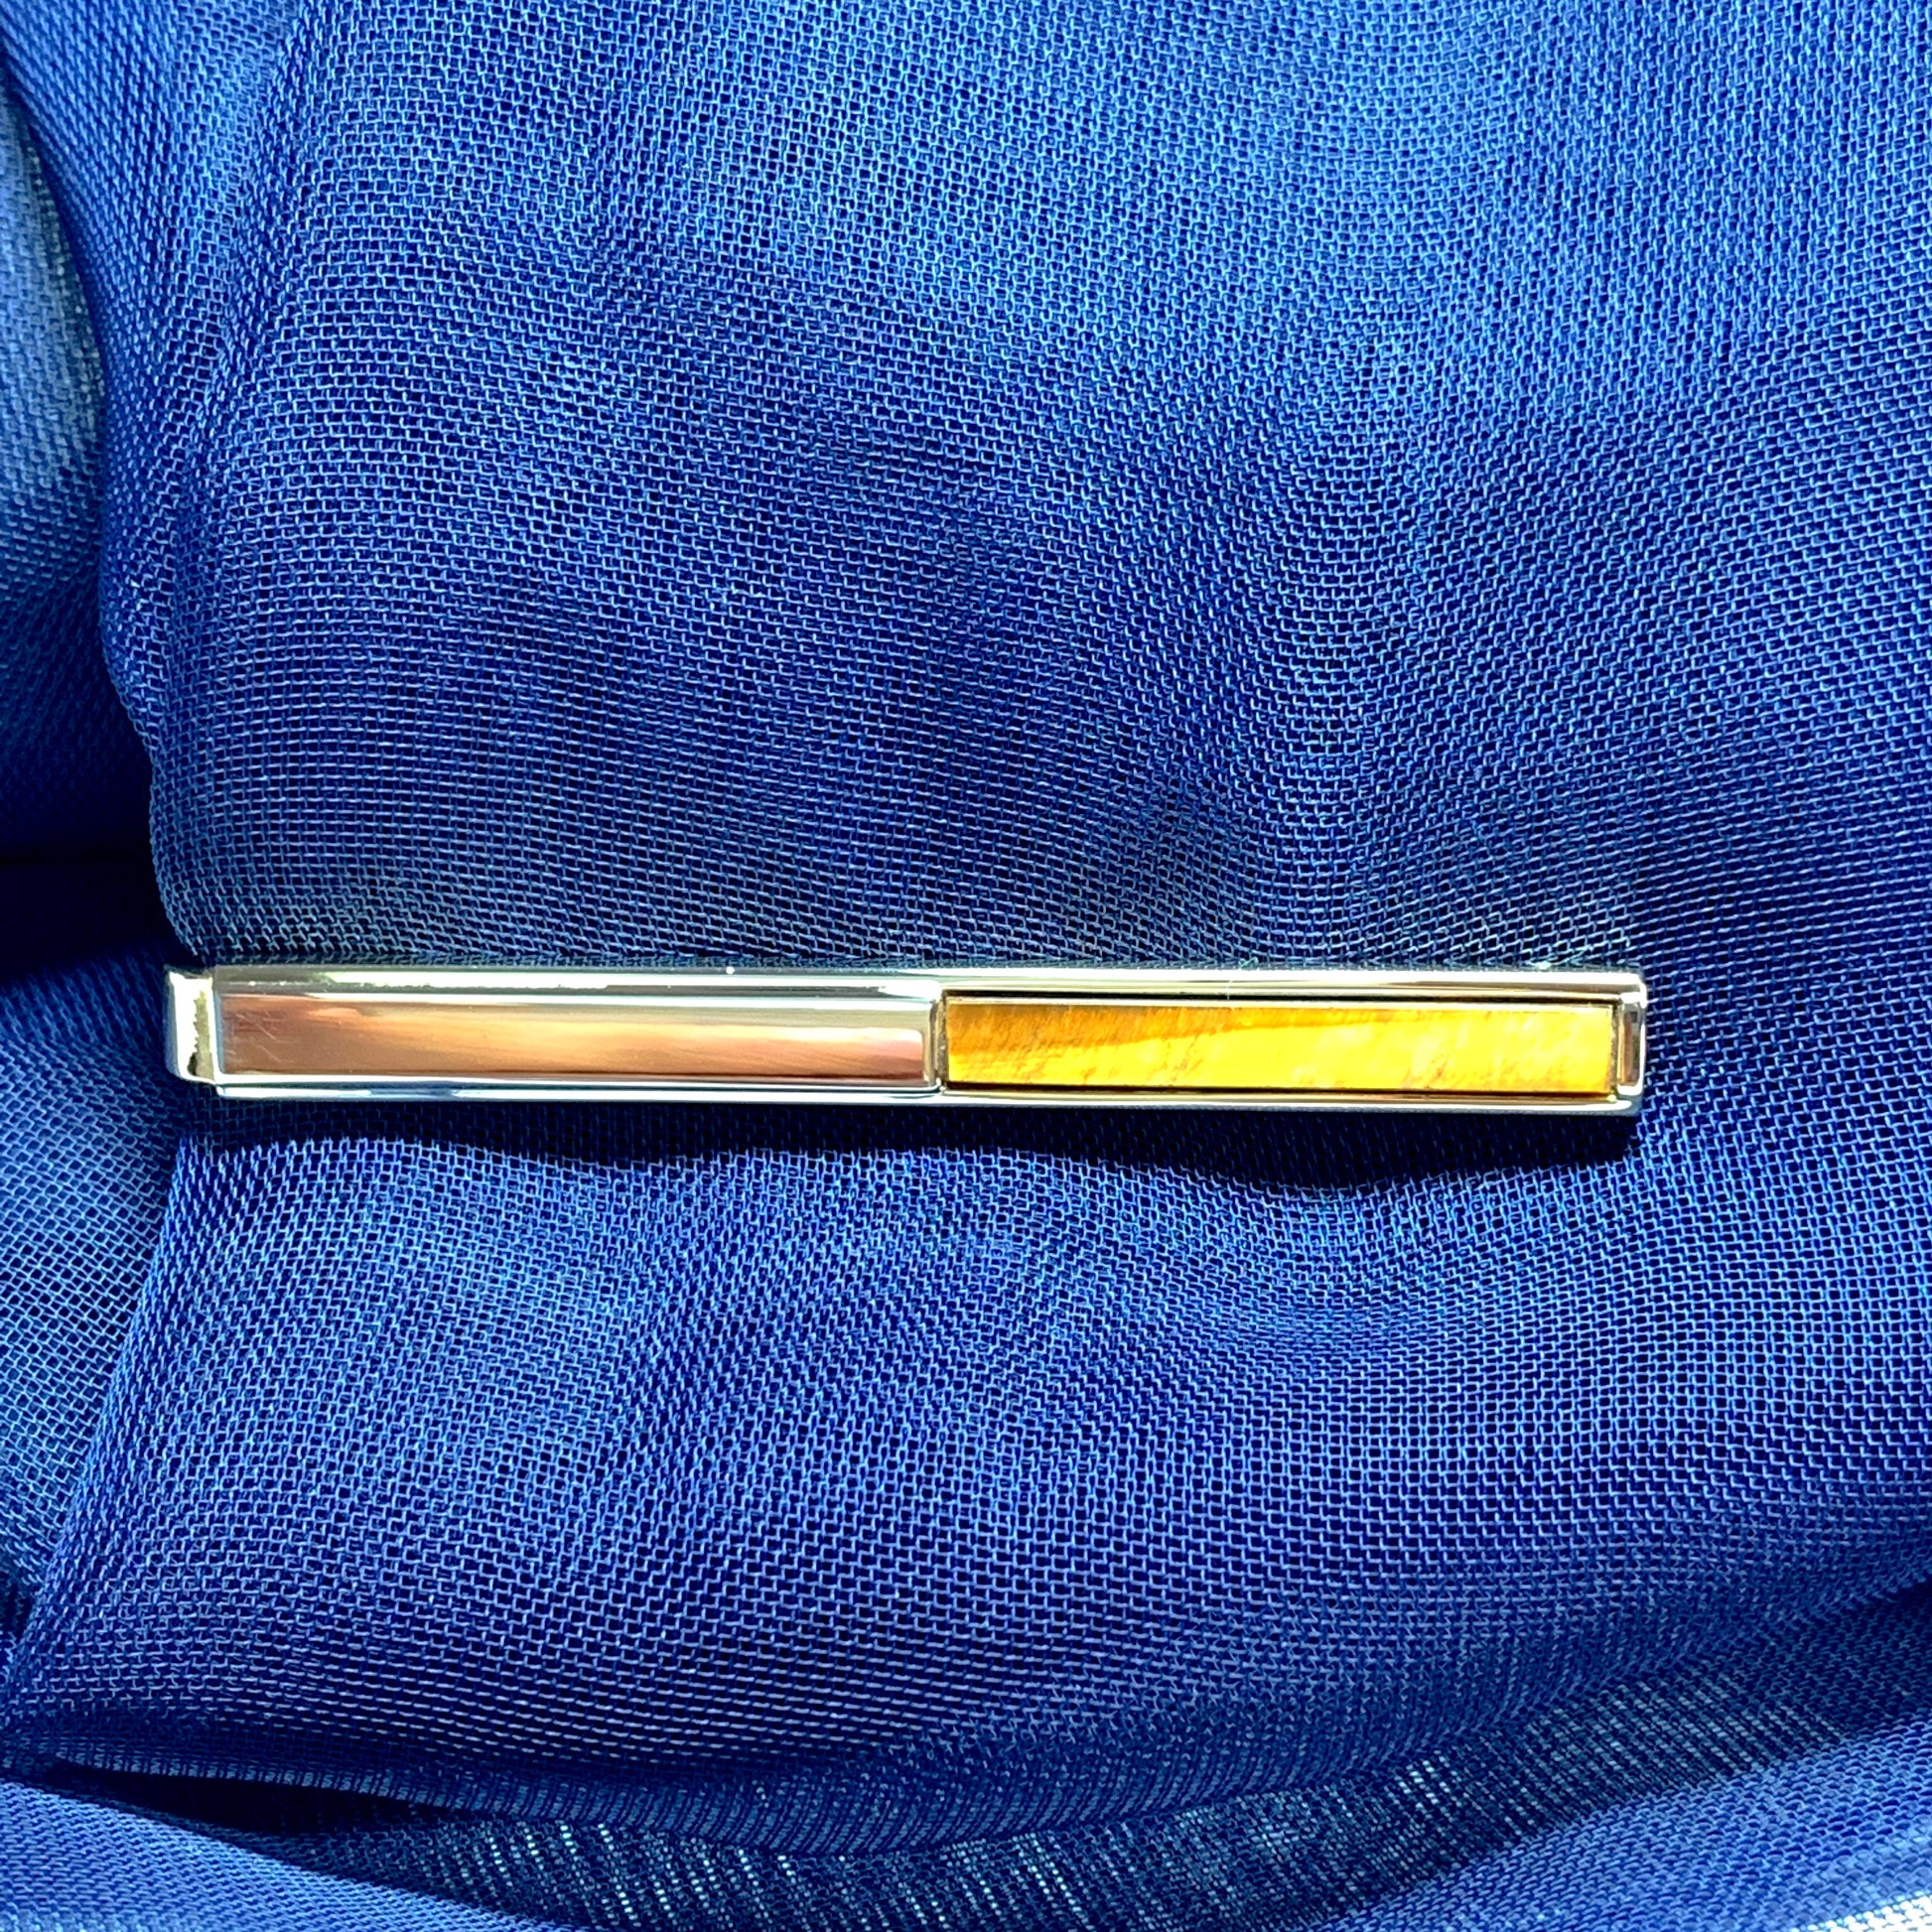 Tiger Eye gold plated tie bar clip slide